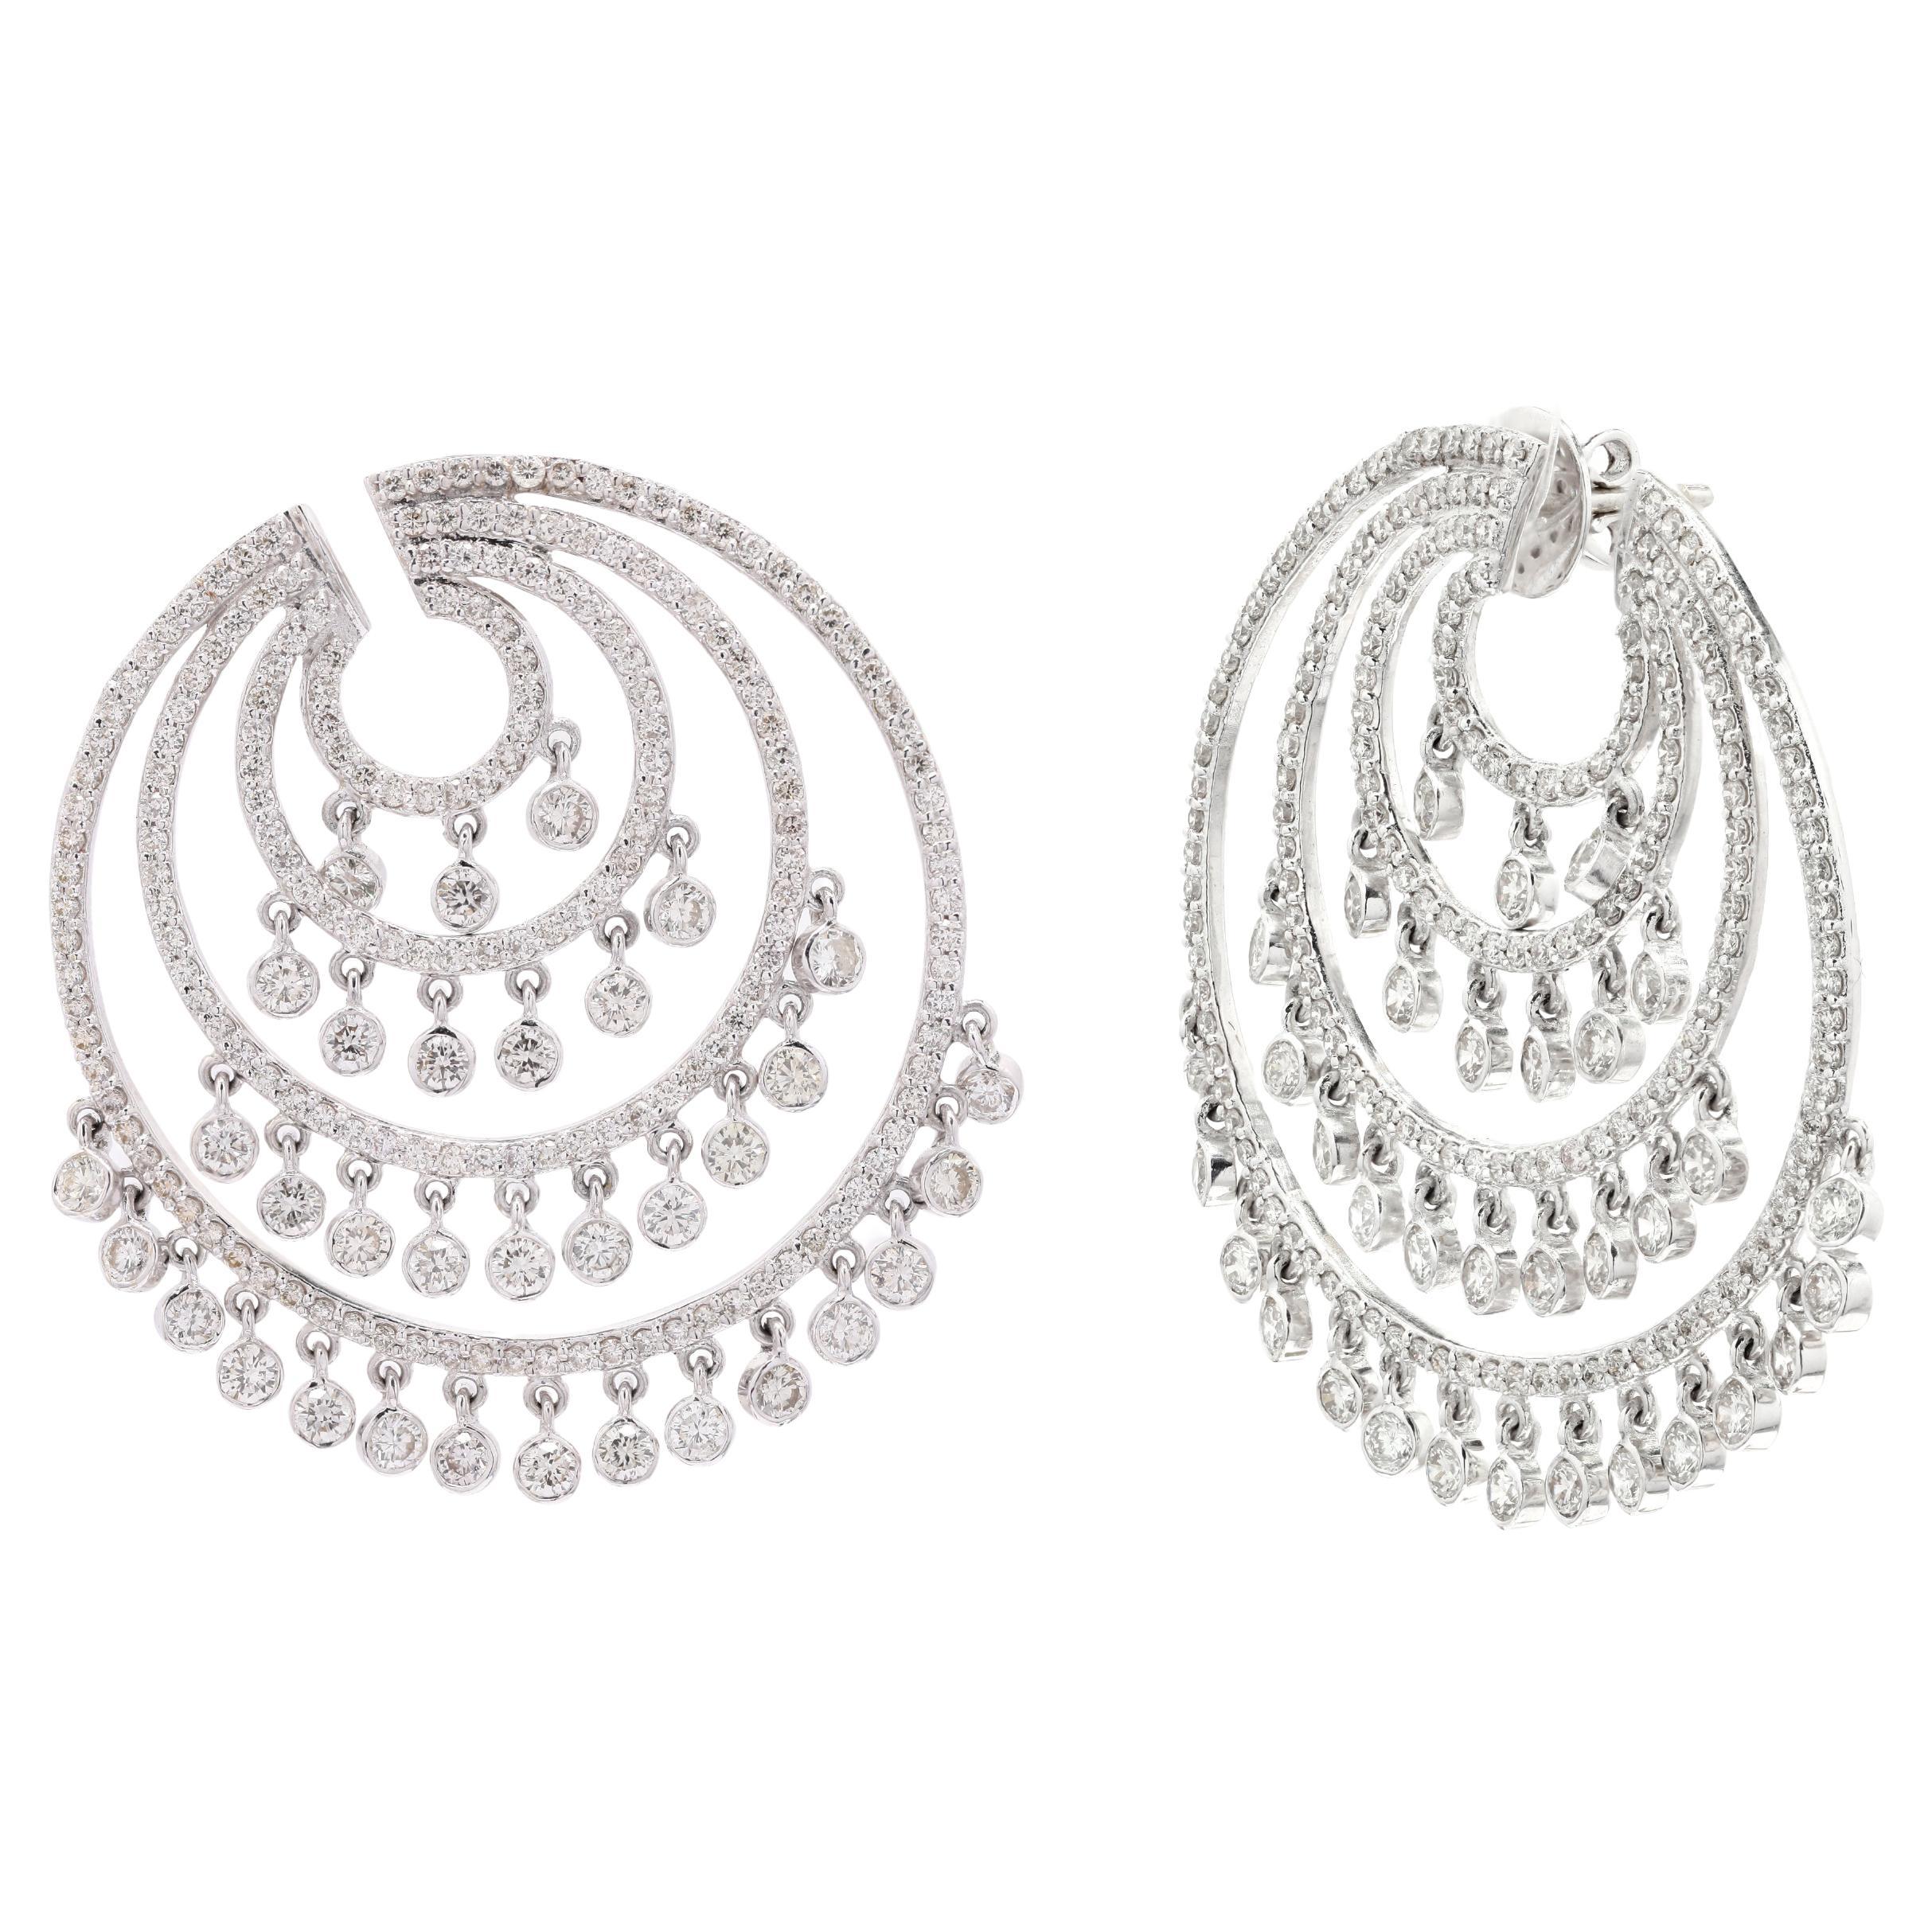 Boucles d'oreilles scintillantes en or blanc 18 carats avec diamants pendants de 6,7 carats